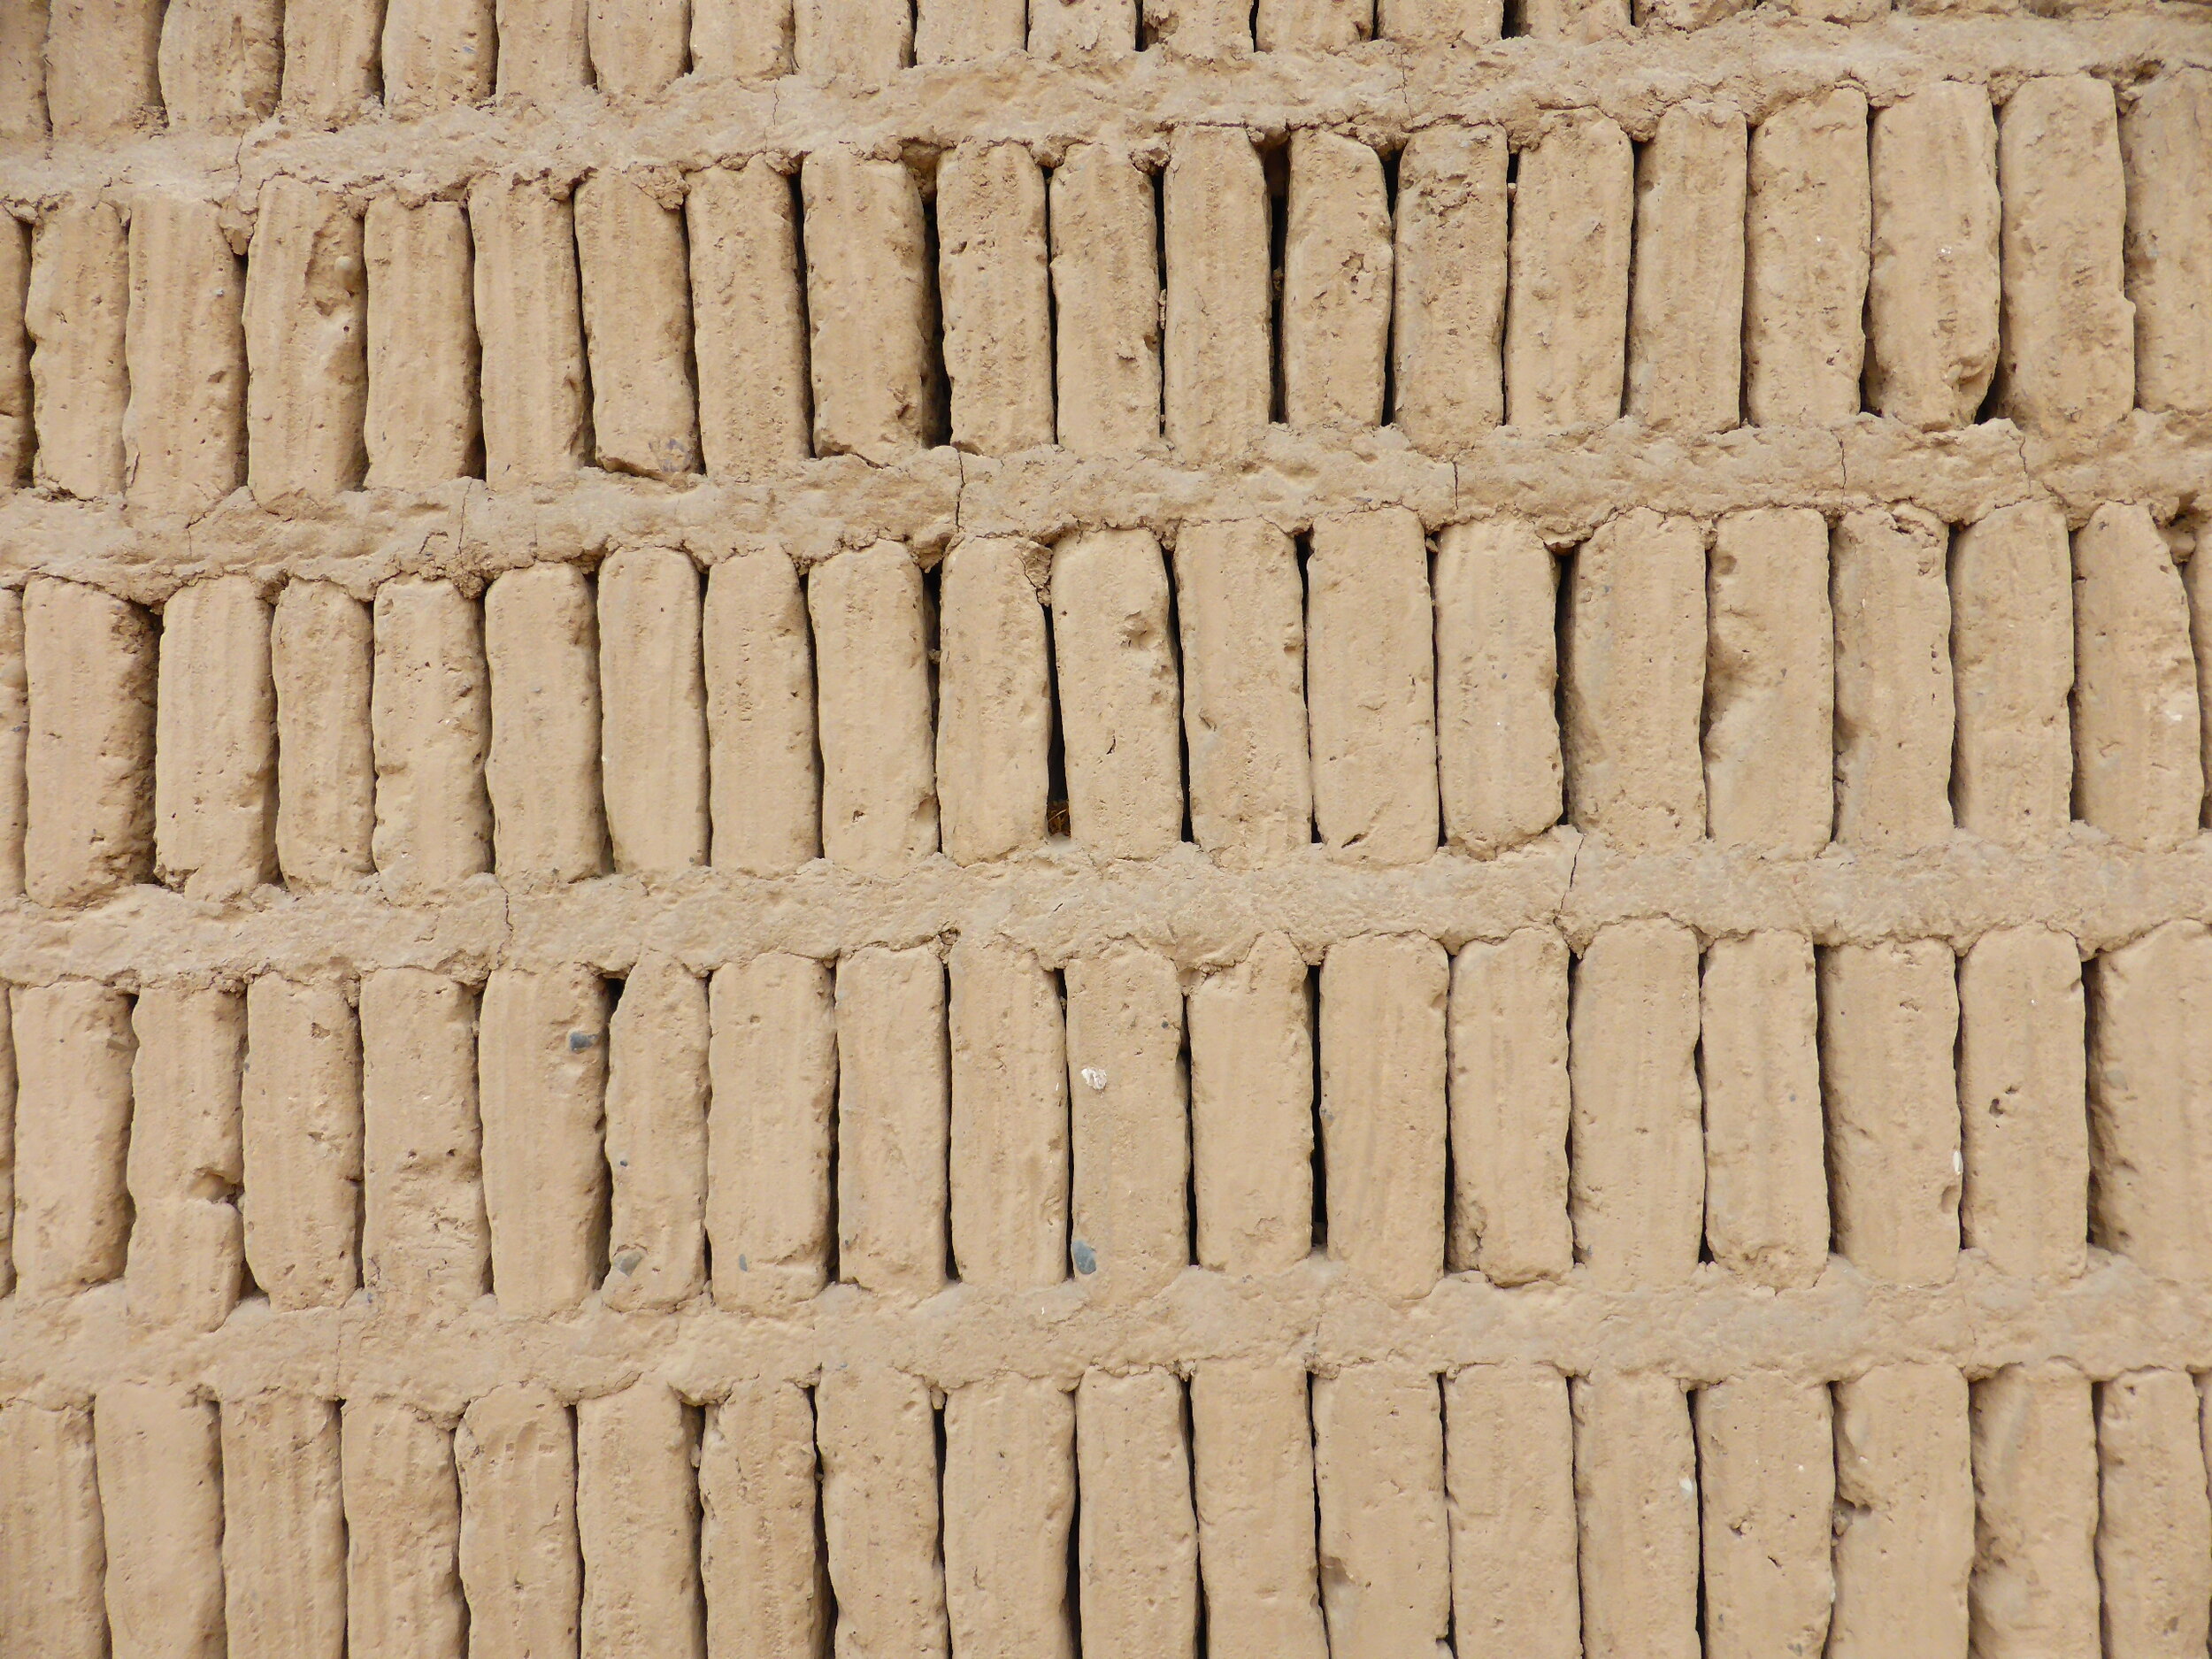  Brickwork, Huaca Pucllana 